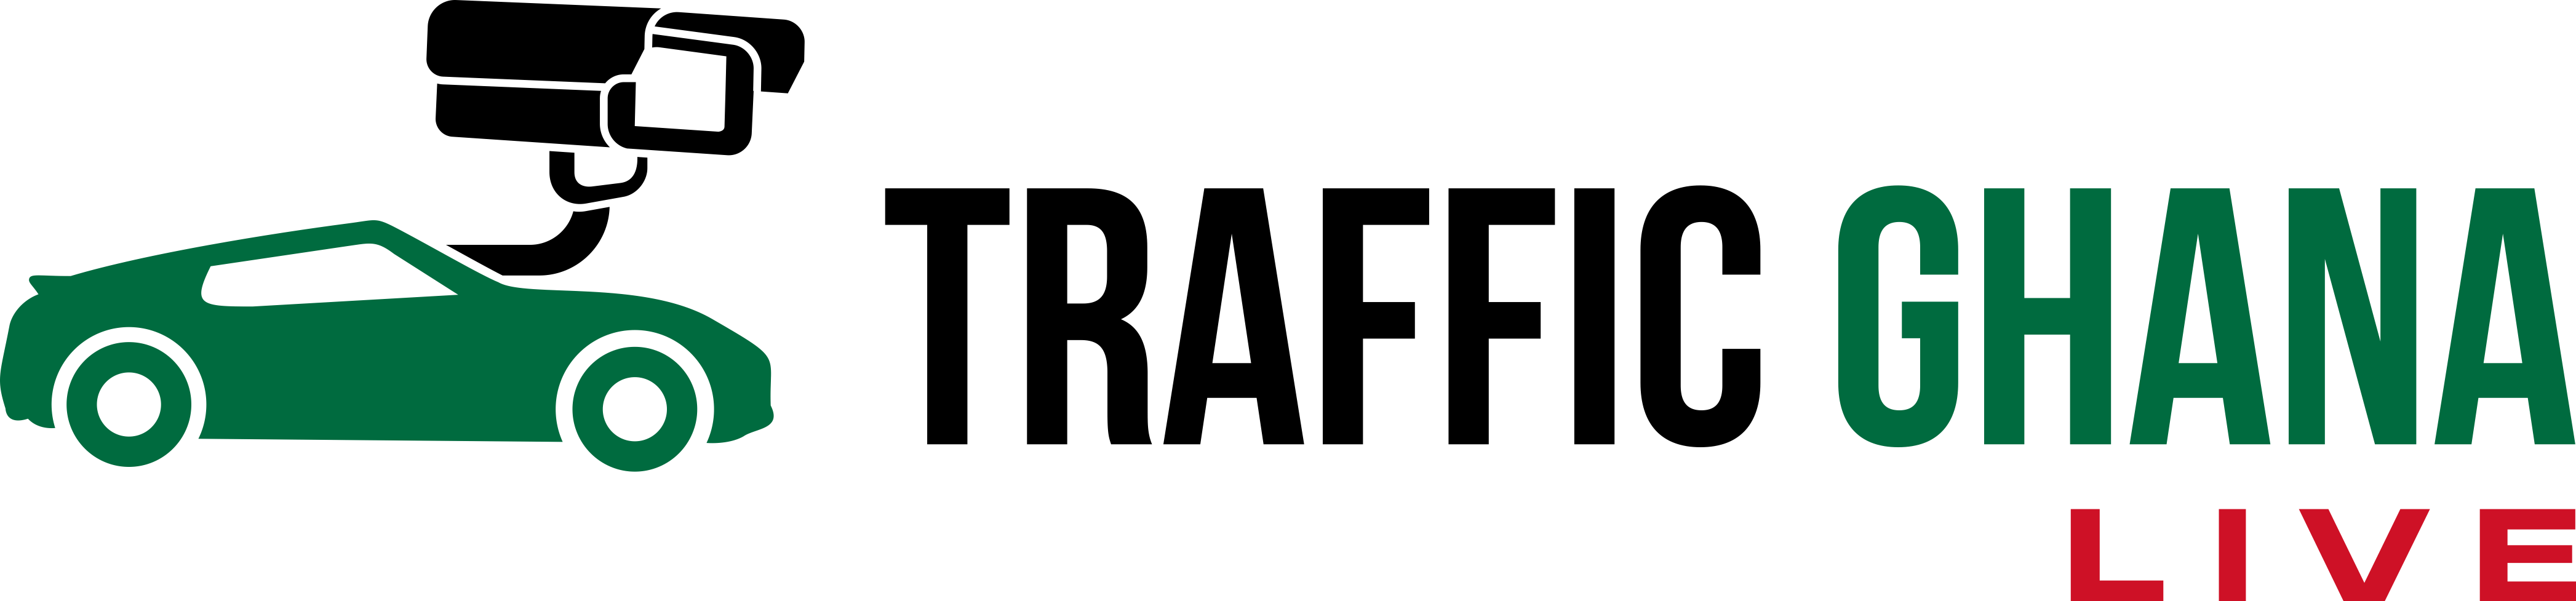 Traffic.com Logo - Accra Archives - Traffic Ghana Live